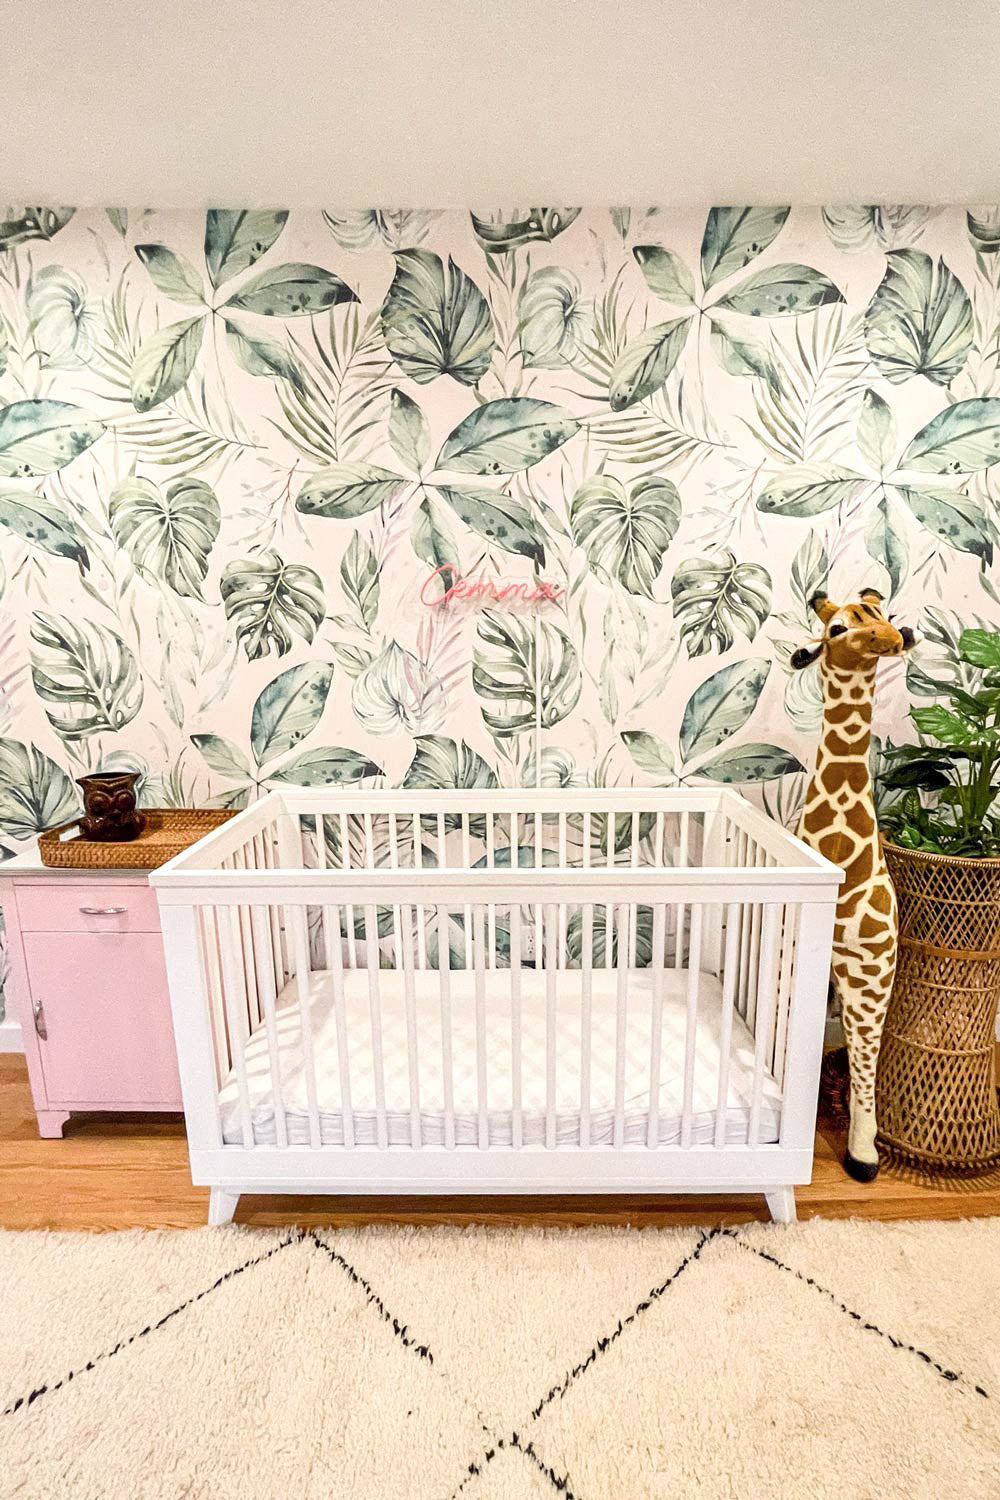 Tropical wallpaper design in baby girl's nursery design